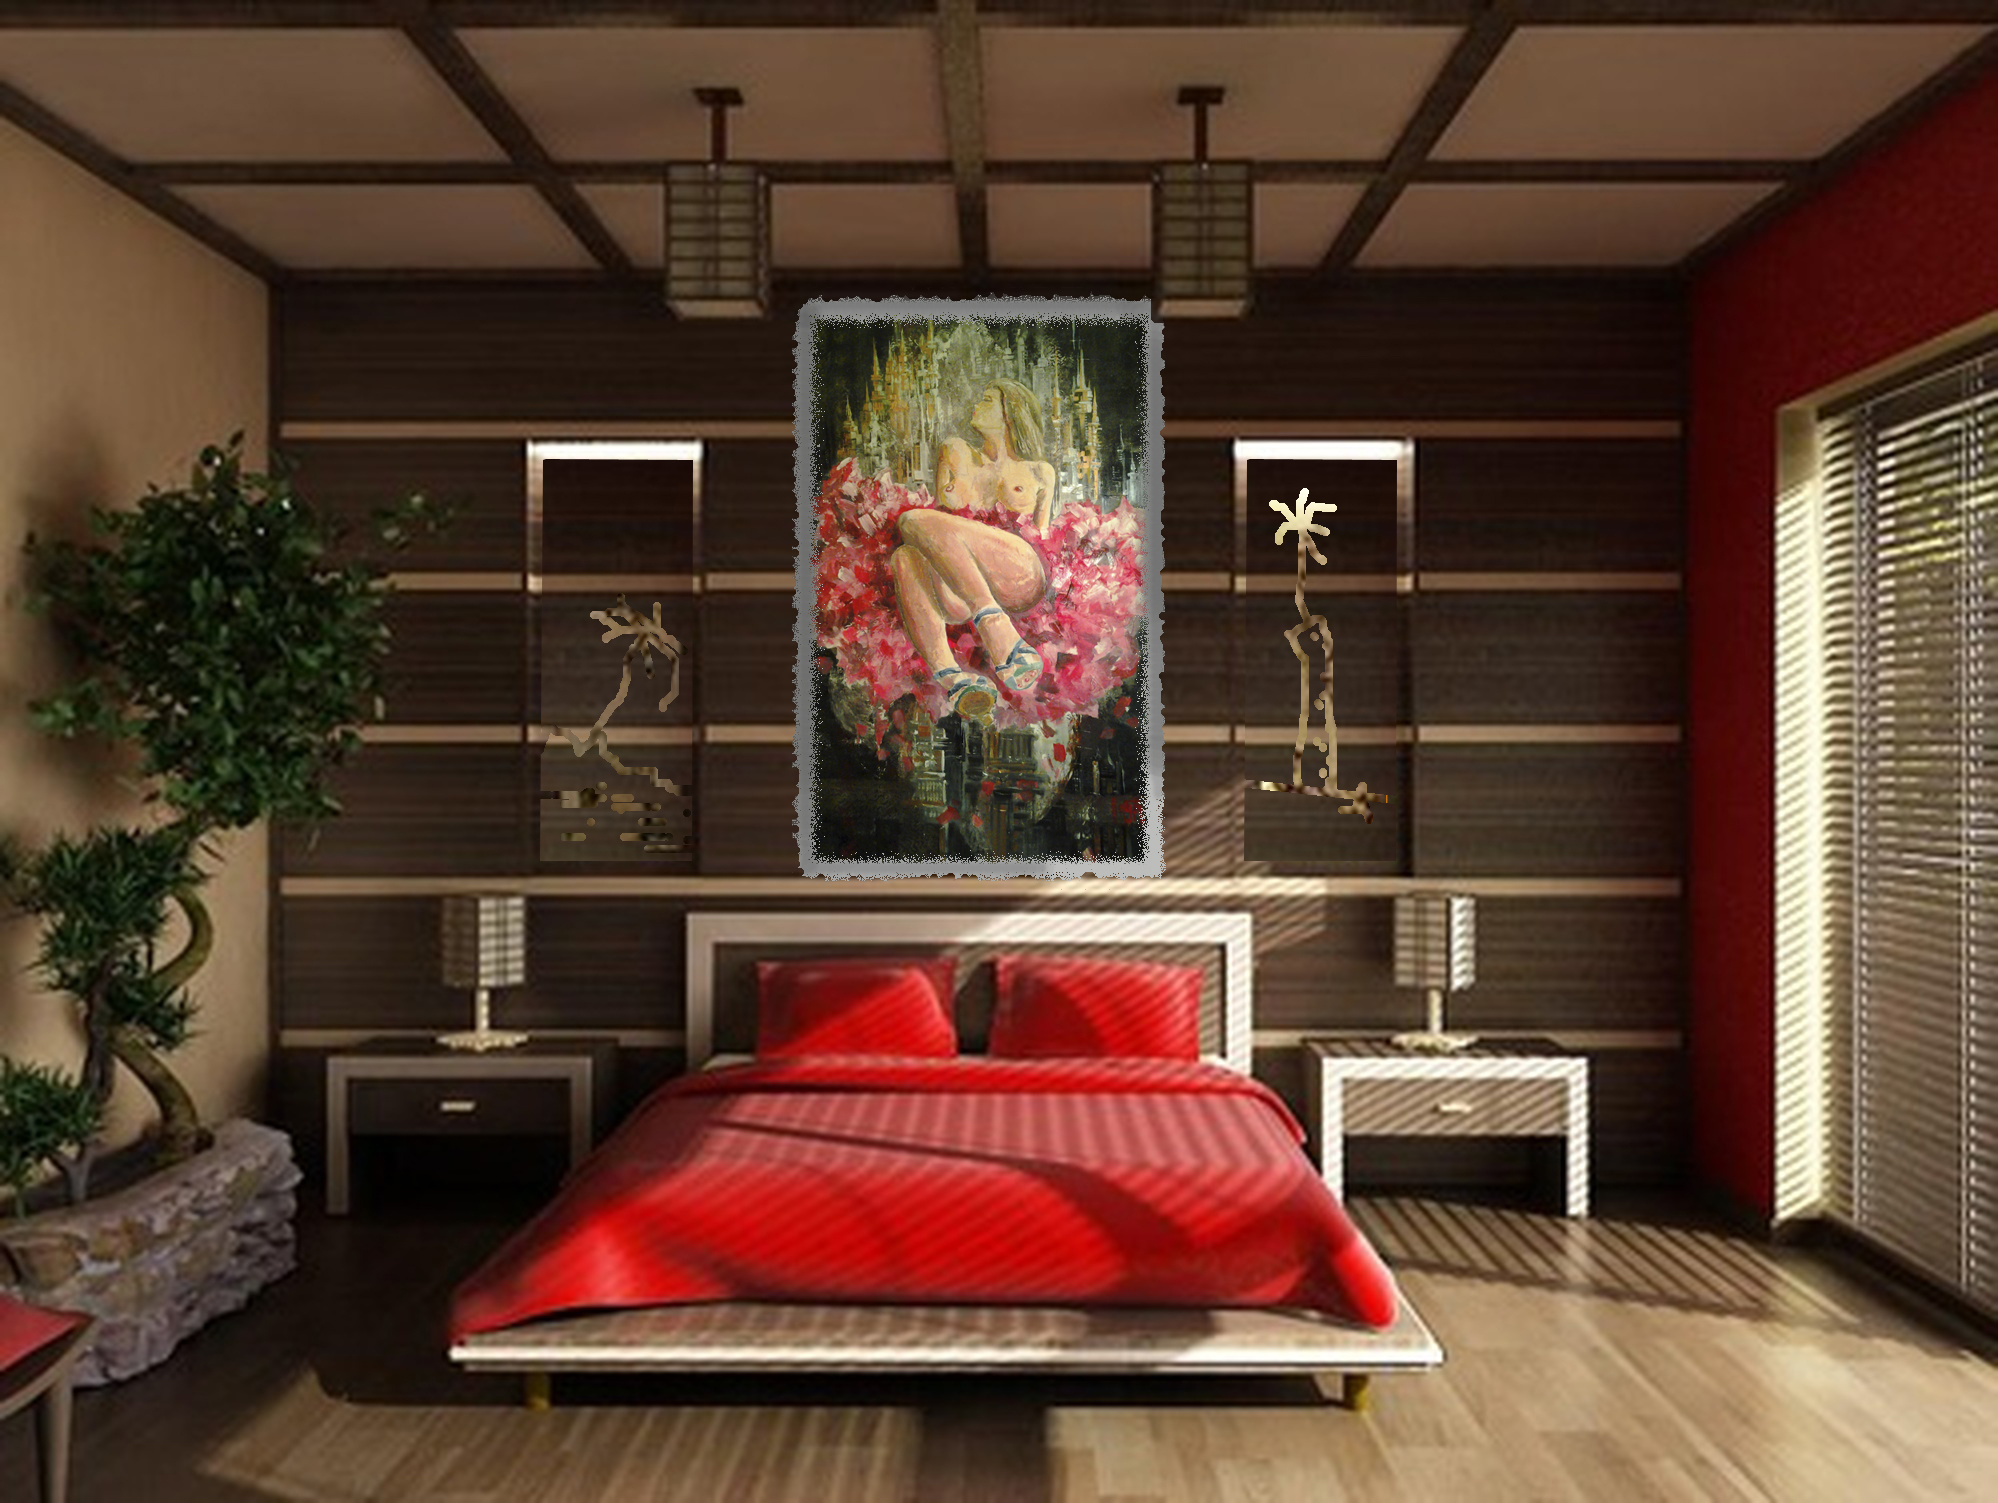 Furniture Arrangement Ideas For Bedroom | Minimalist Home Design Ideas